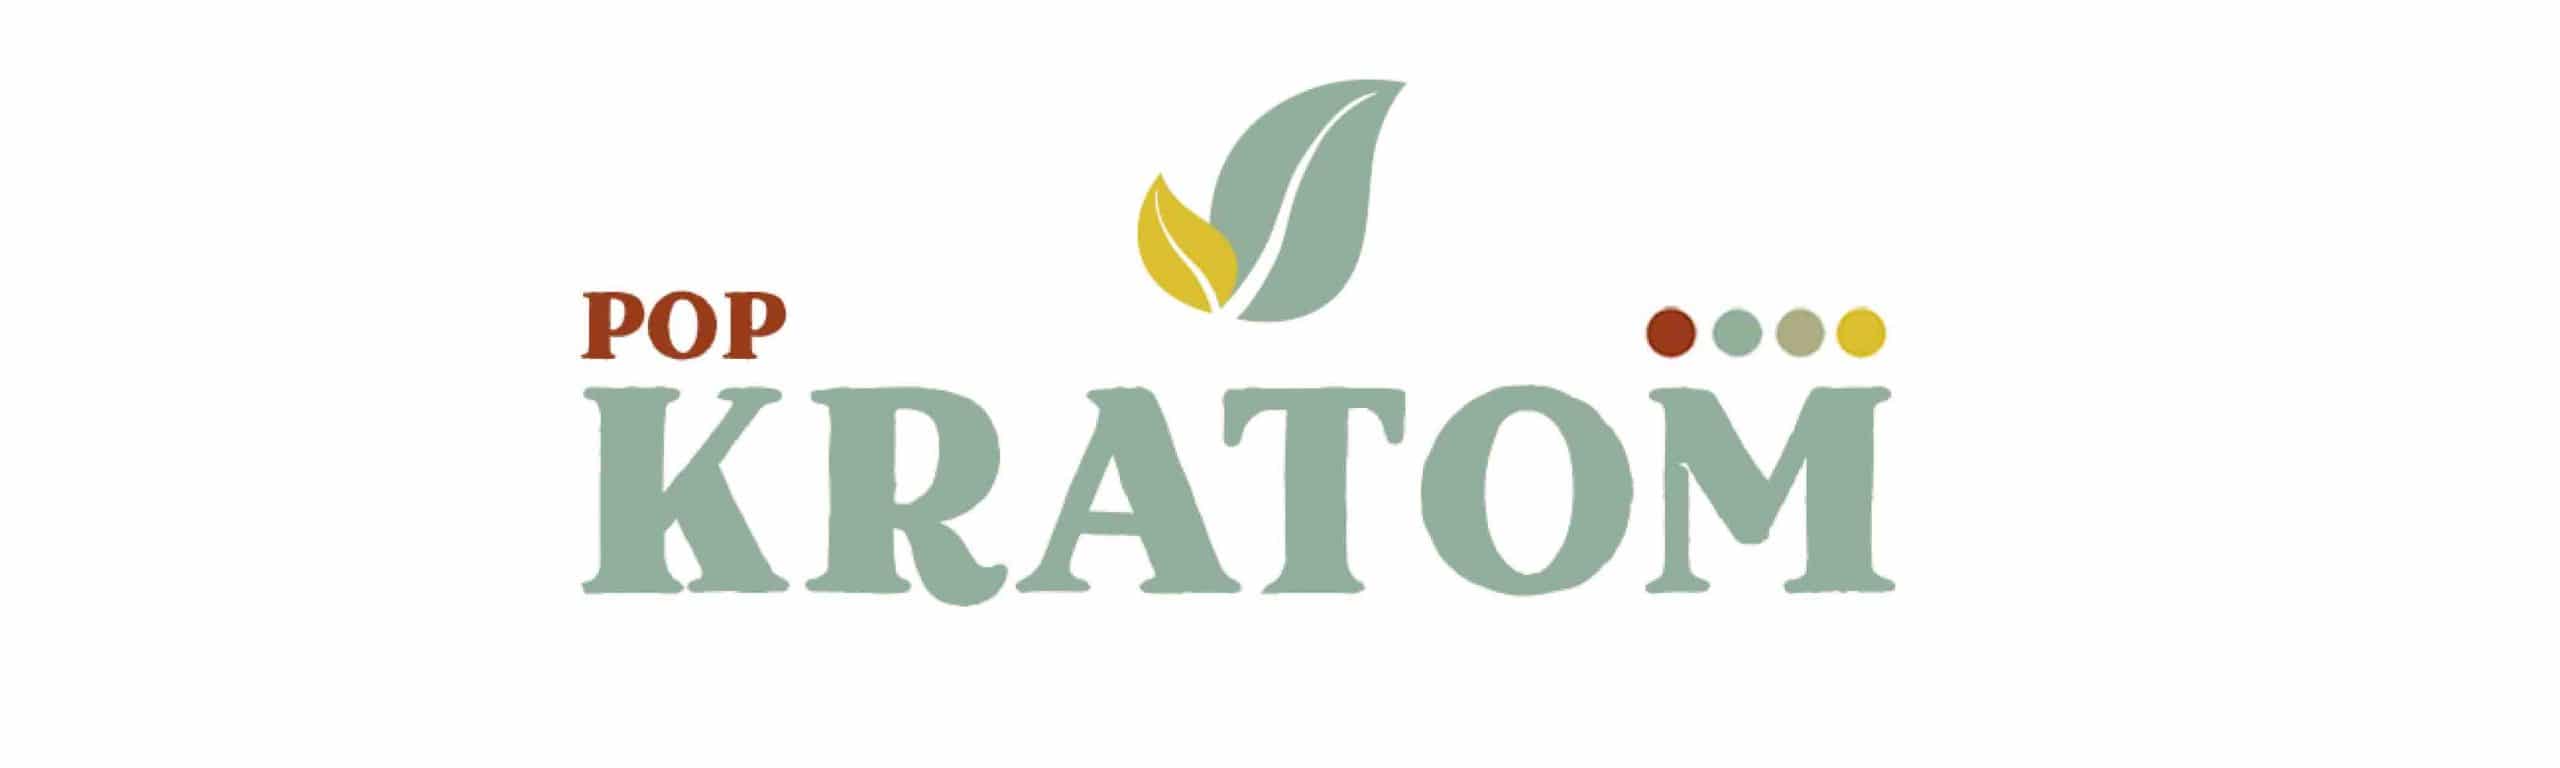 image-of-pop-kratom-logo